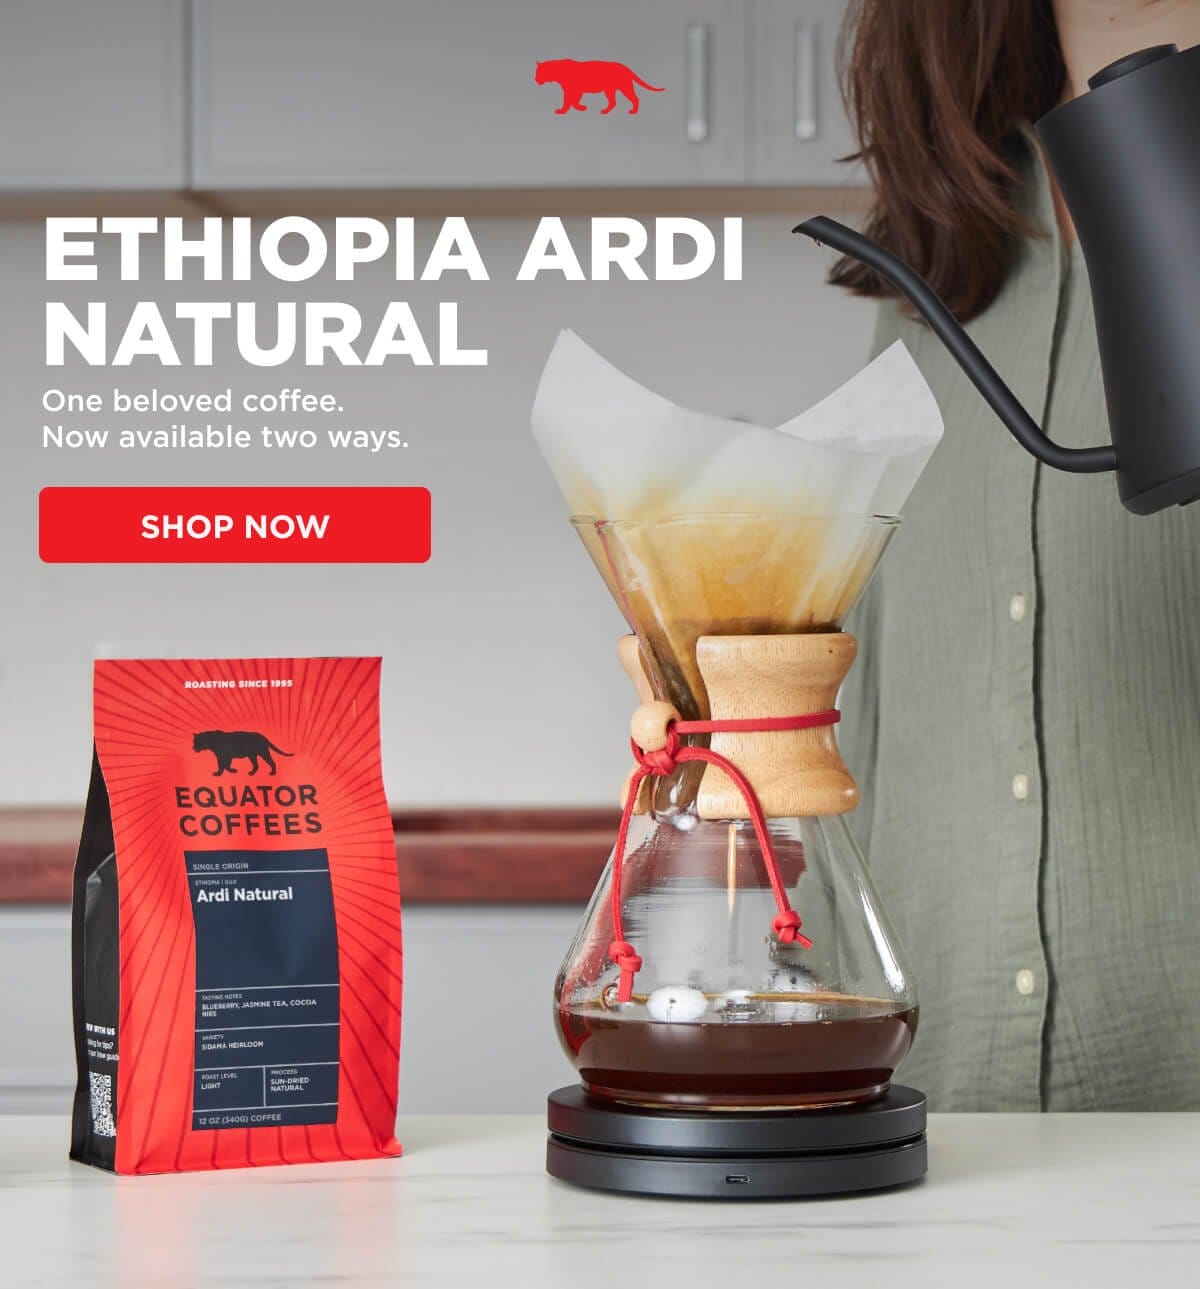 Ethiopia Ardi Natural: One beloved coffee, two ways